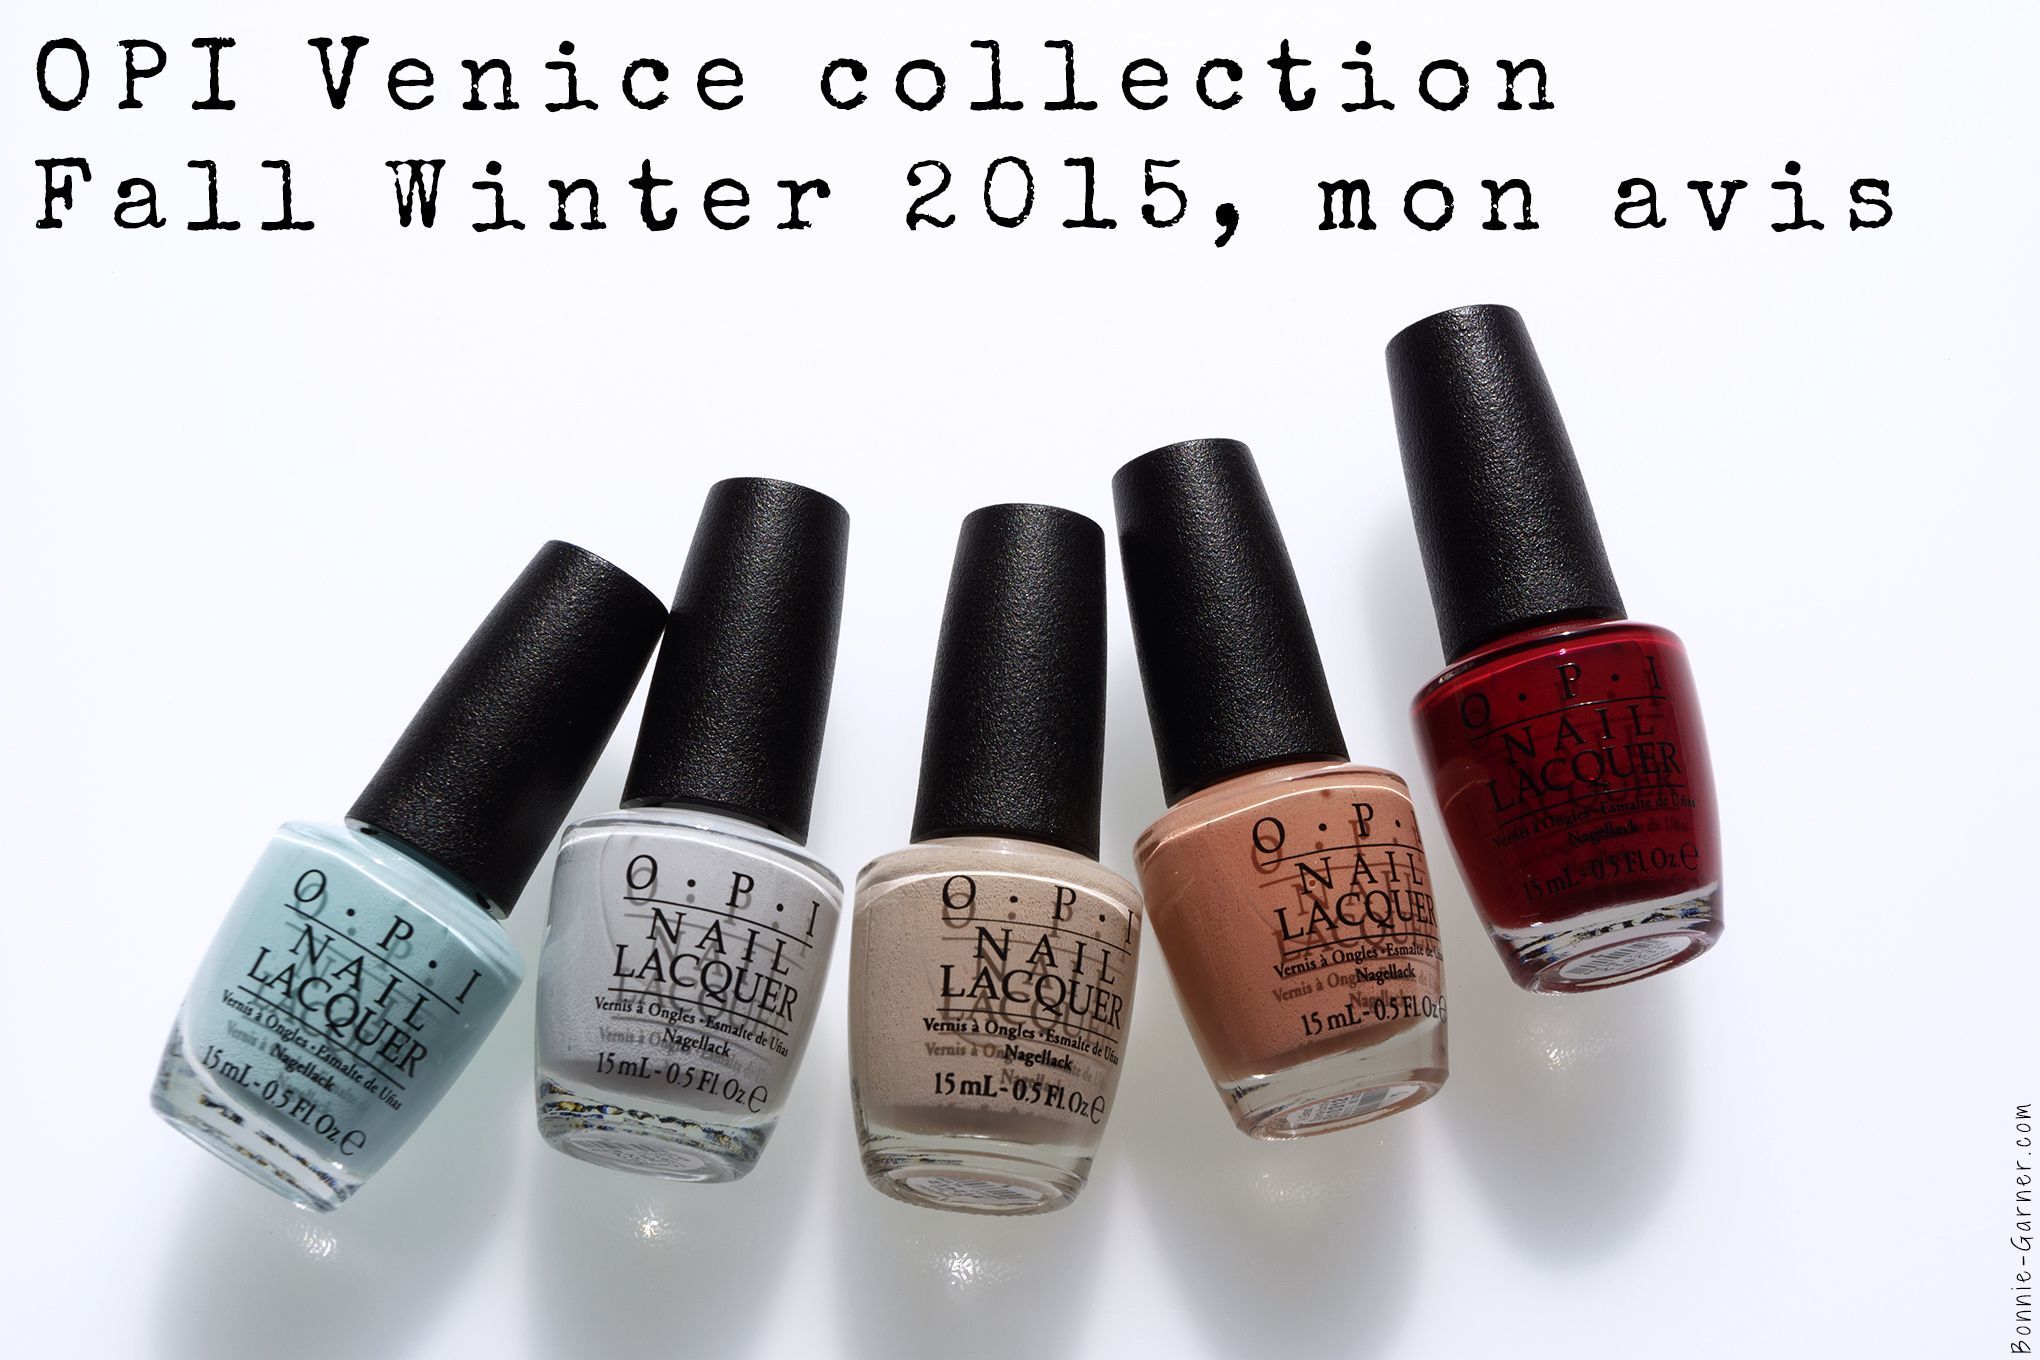 OPI Venice collection Fall Winter 2015, mon avis